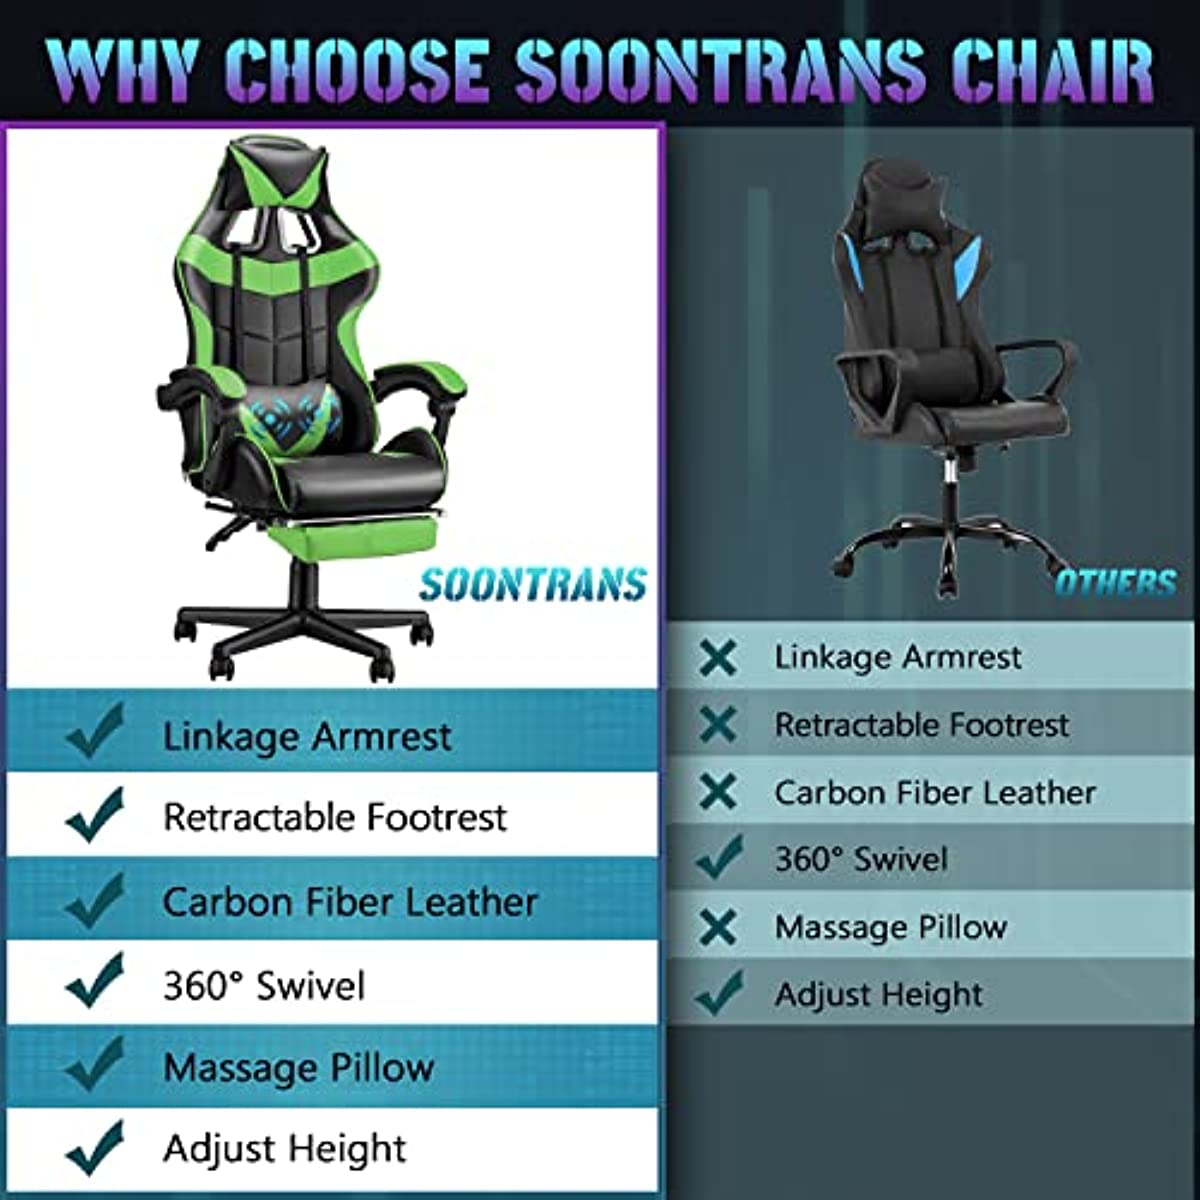 87sarkad choice Ergonomic Gaming Chair